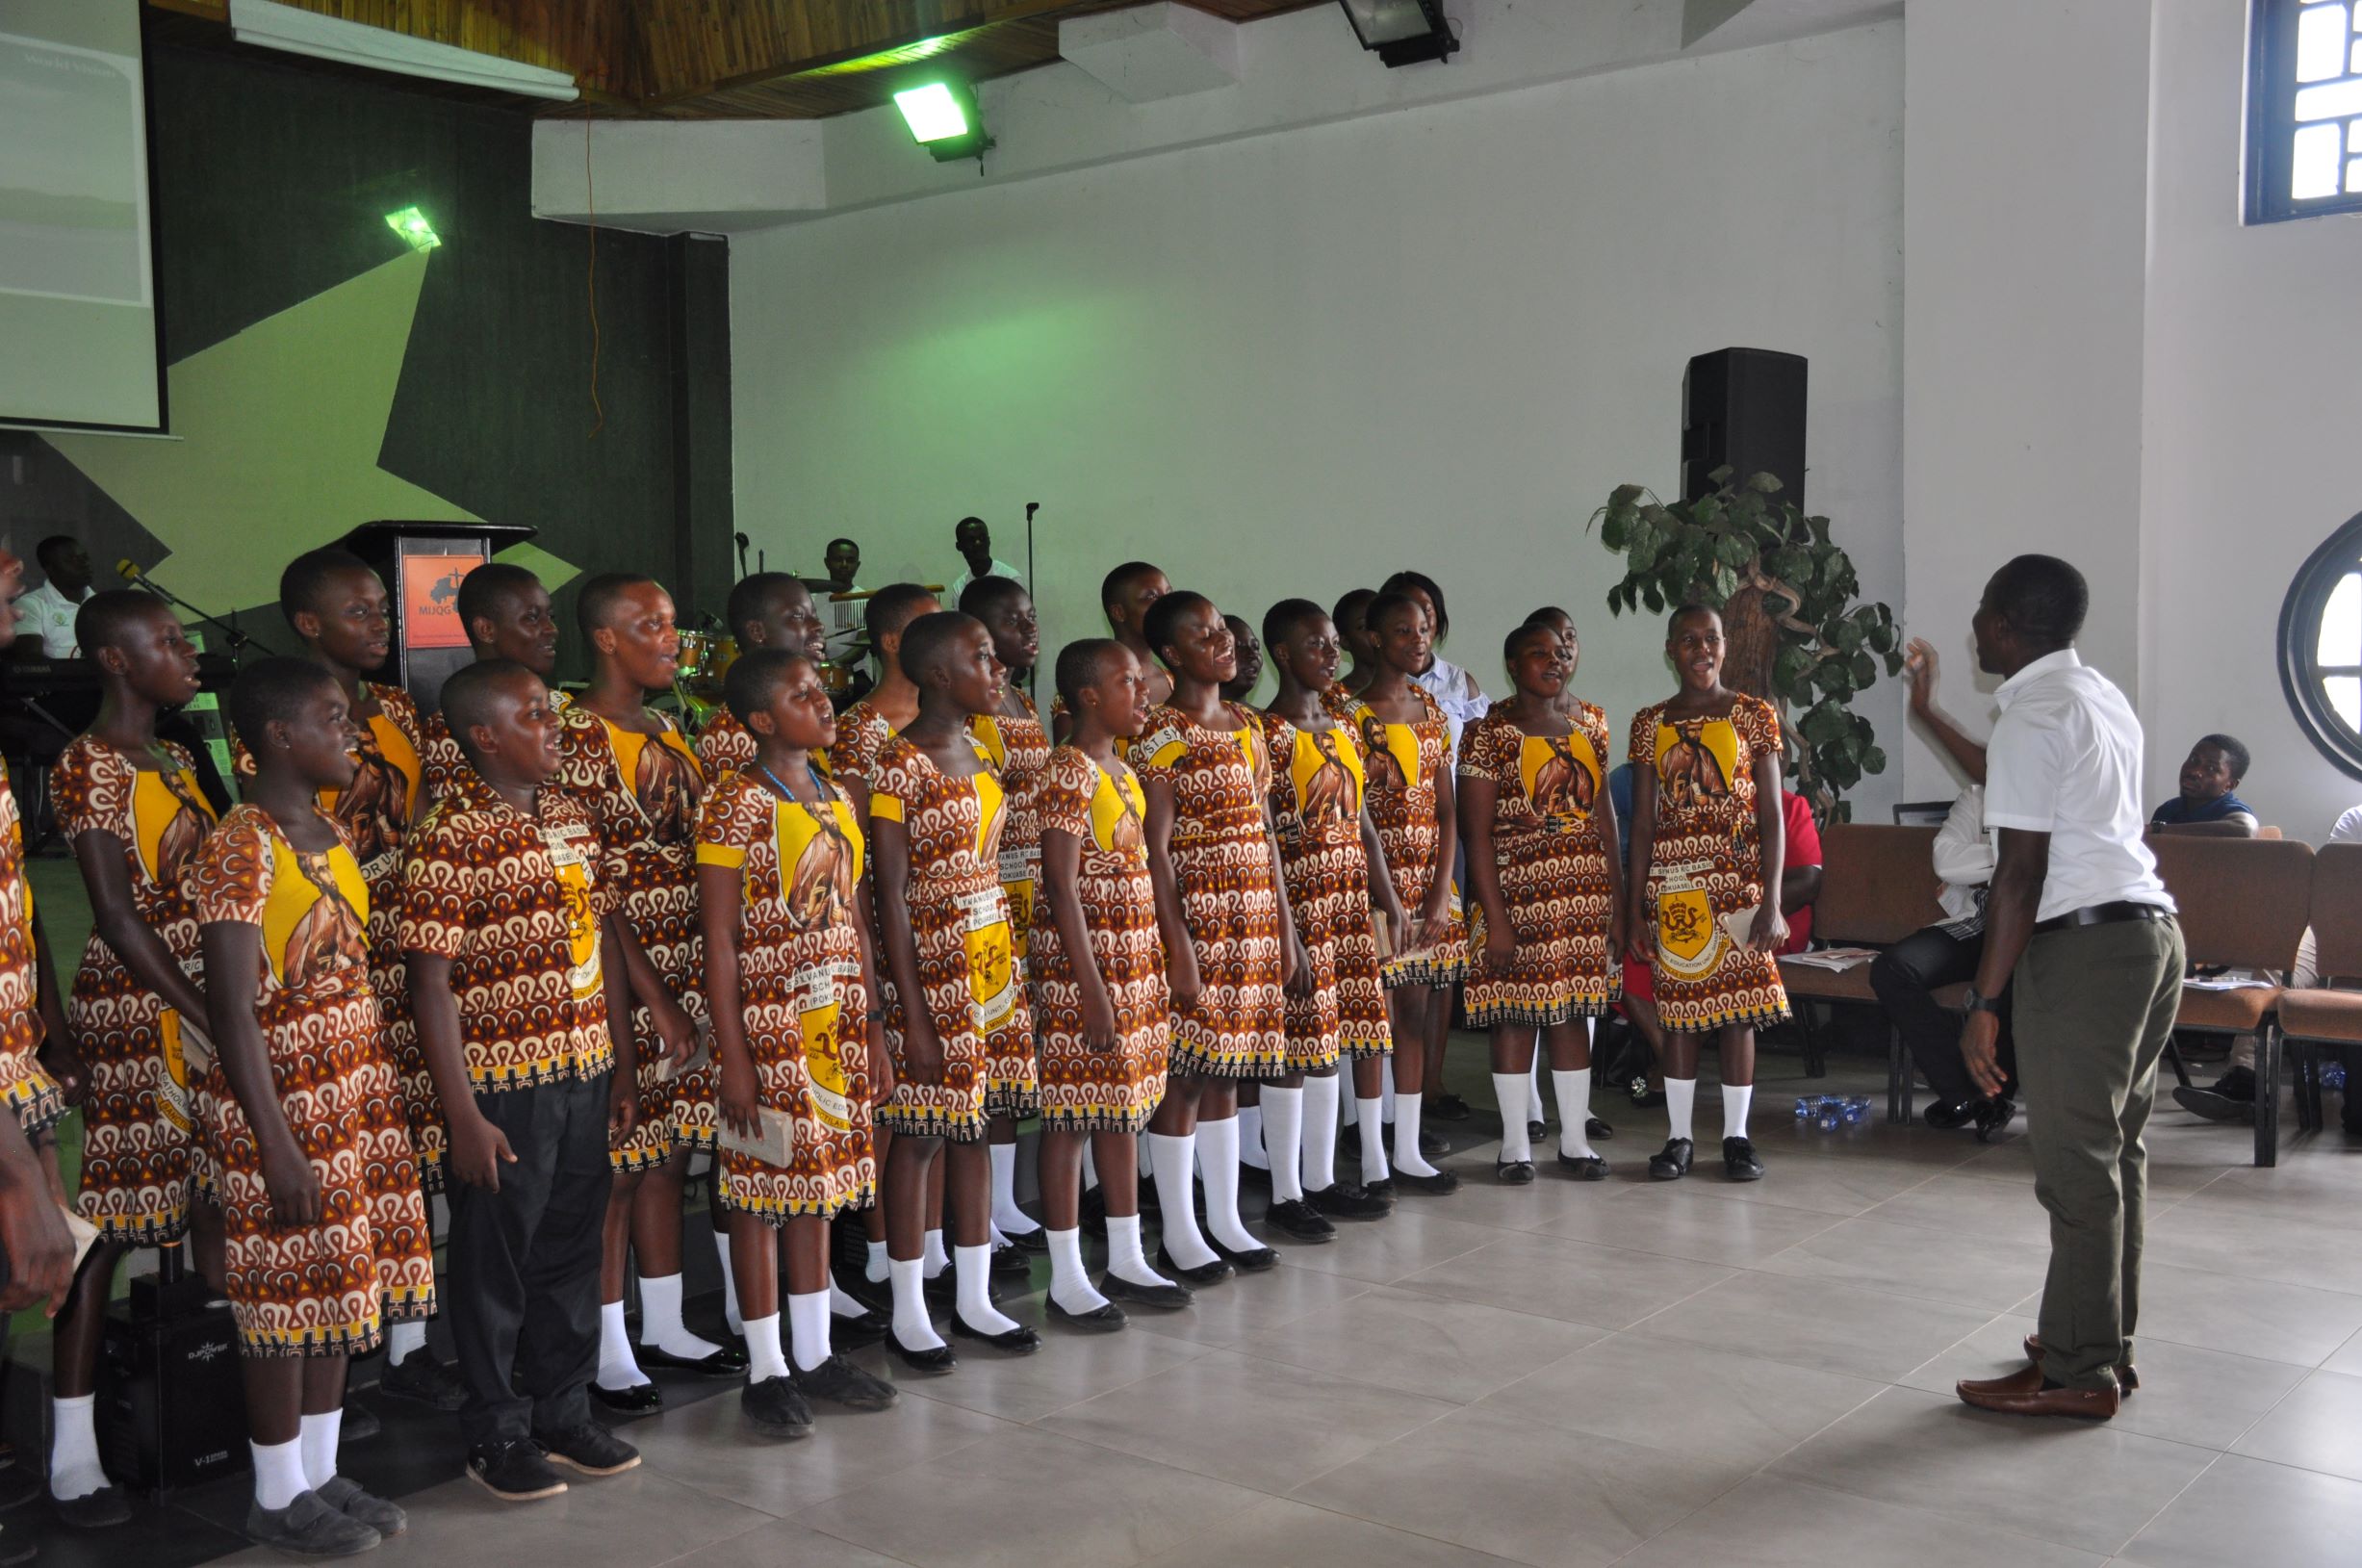 St. Sylvanus School choir ministering the congregation